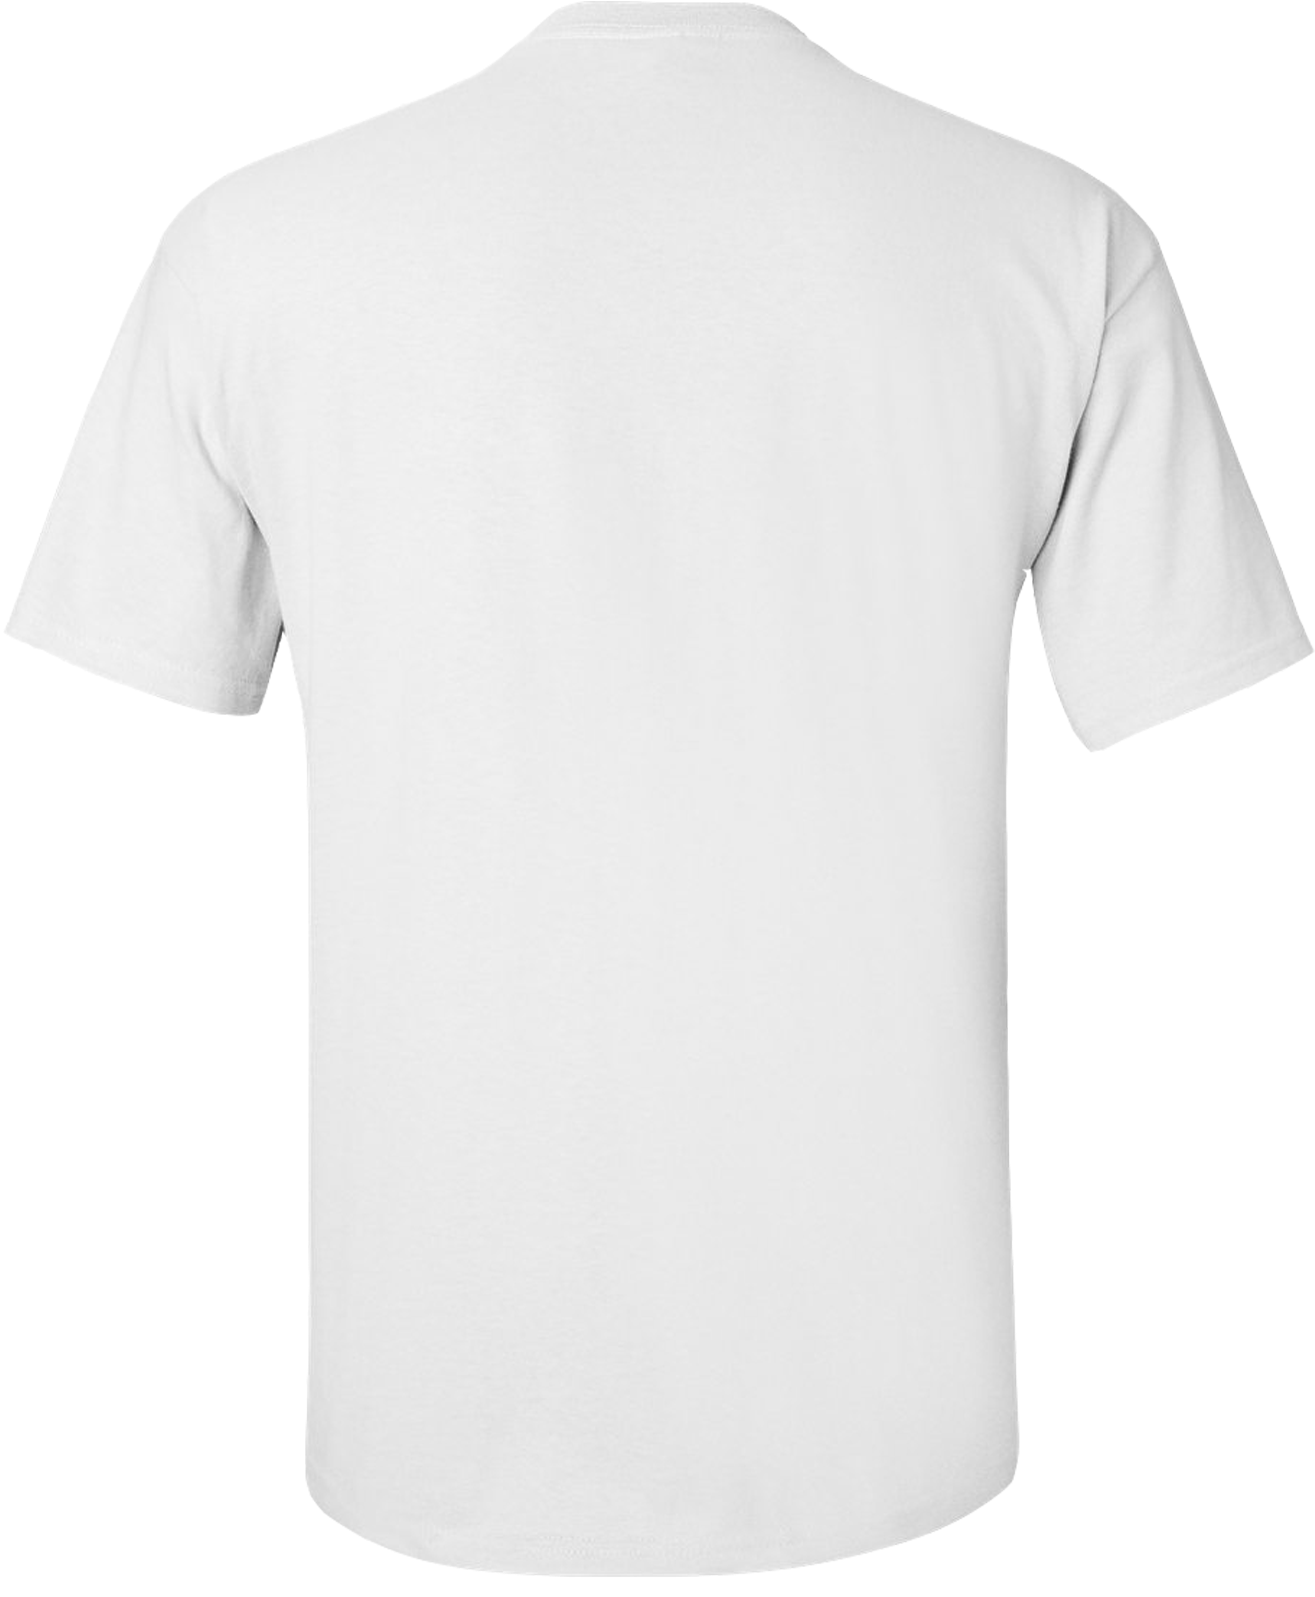 White Brand Shirt Front White Brand Shirt Back - Clip Art Library